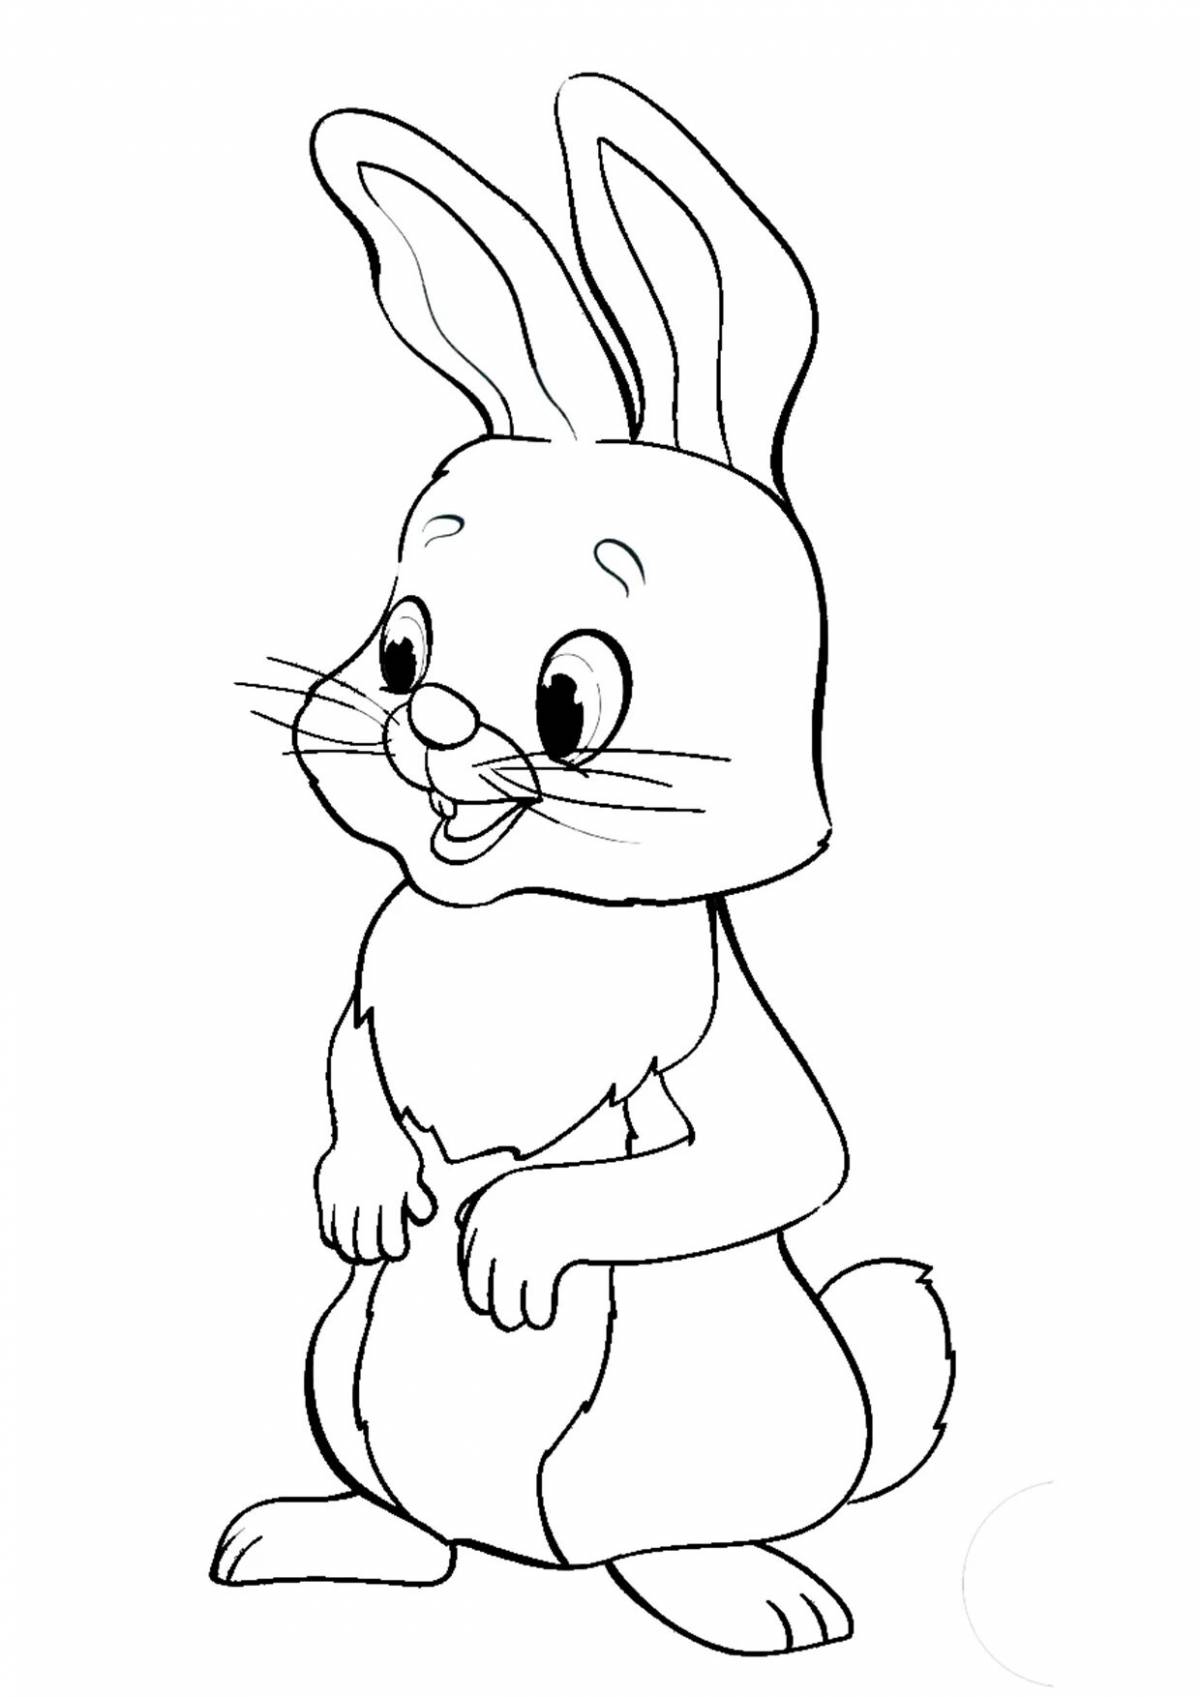 Zippy coloring page bunny для детей 2-3 лет